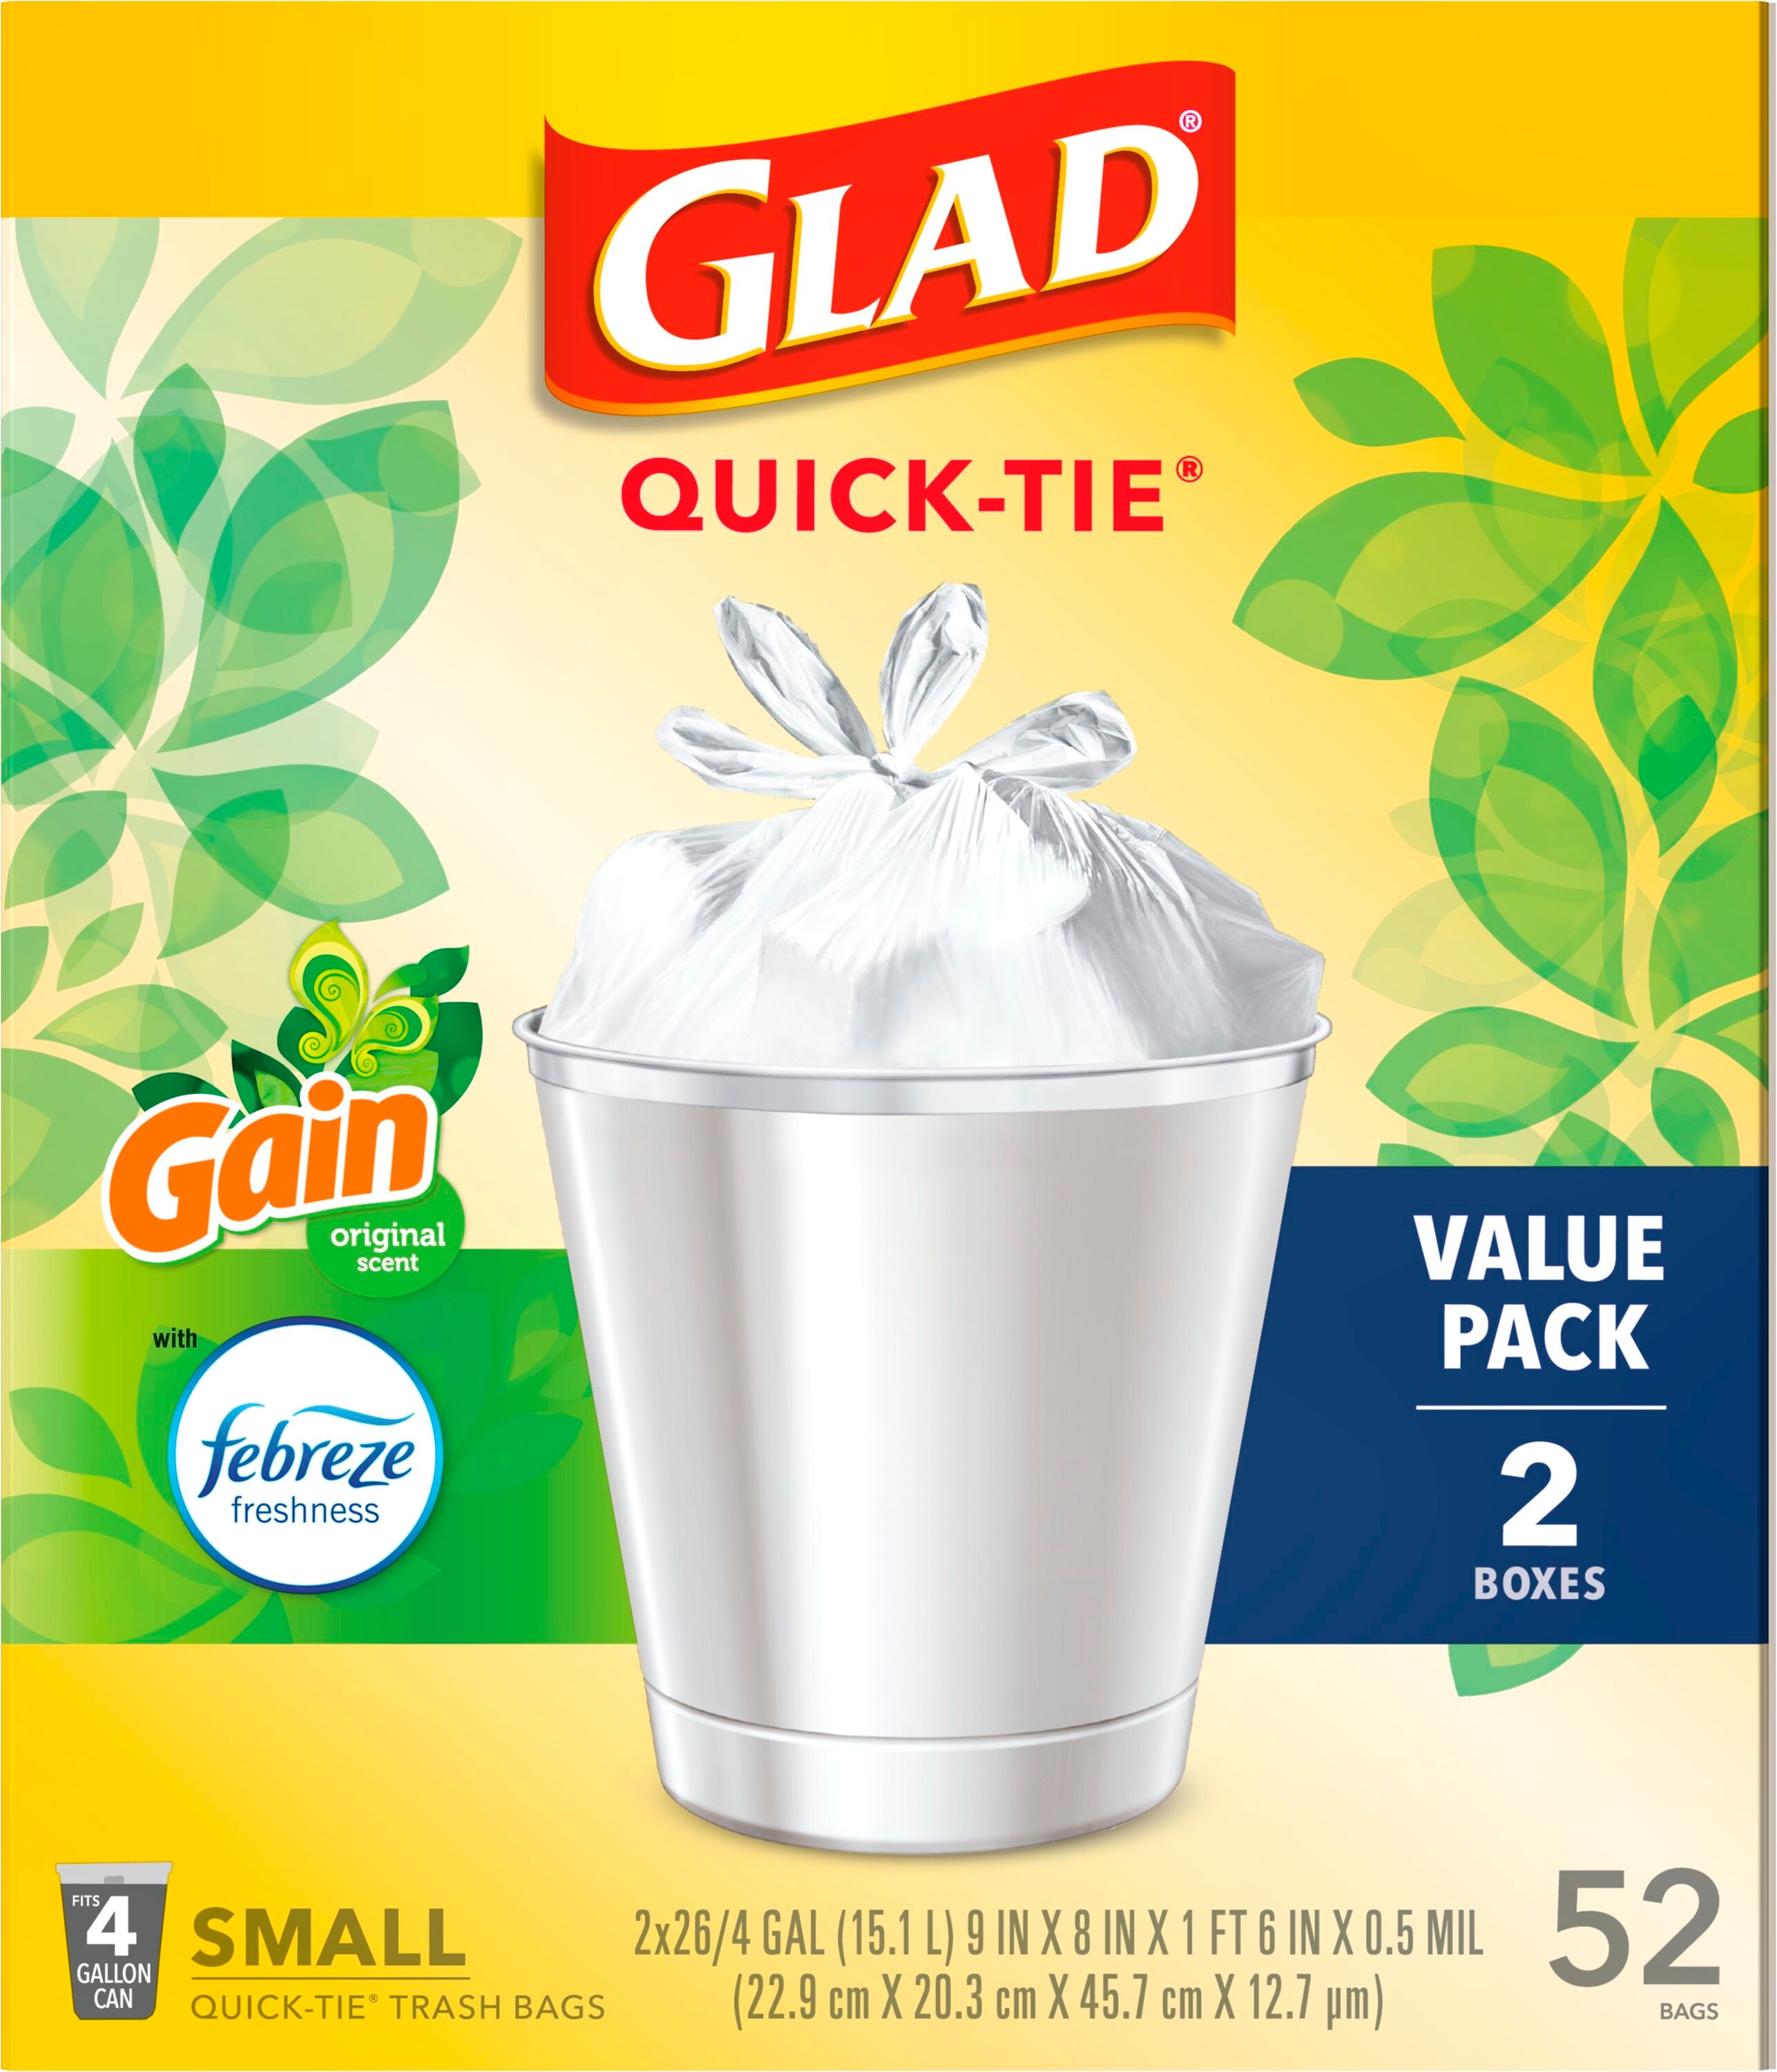 Glad 4-Gallons White Plastic Wastebasket Twist Tie Trash Bag (60